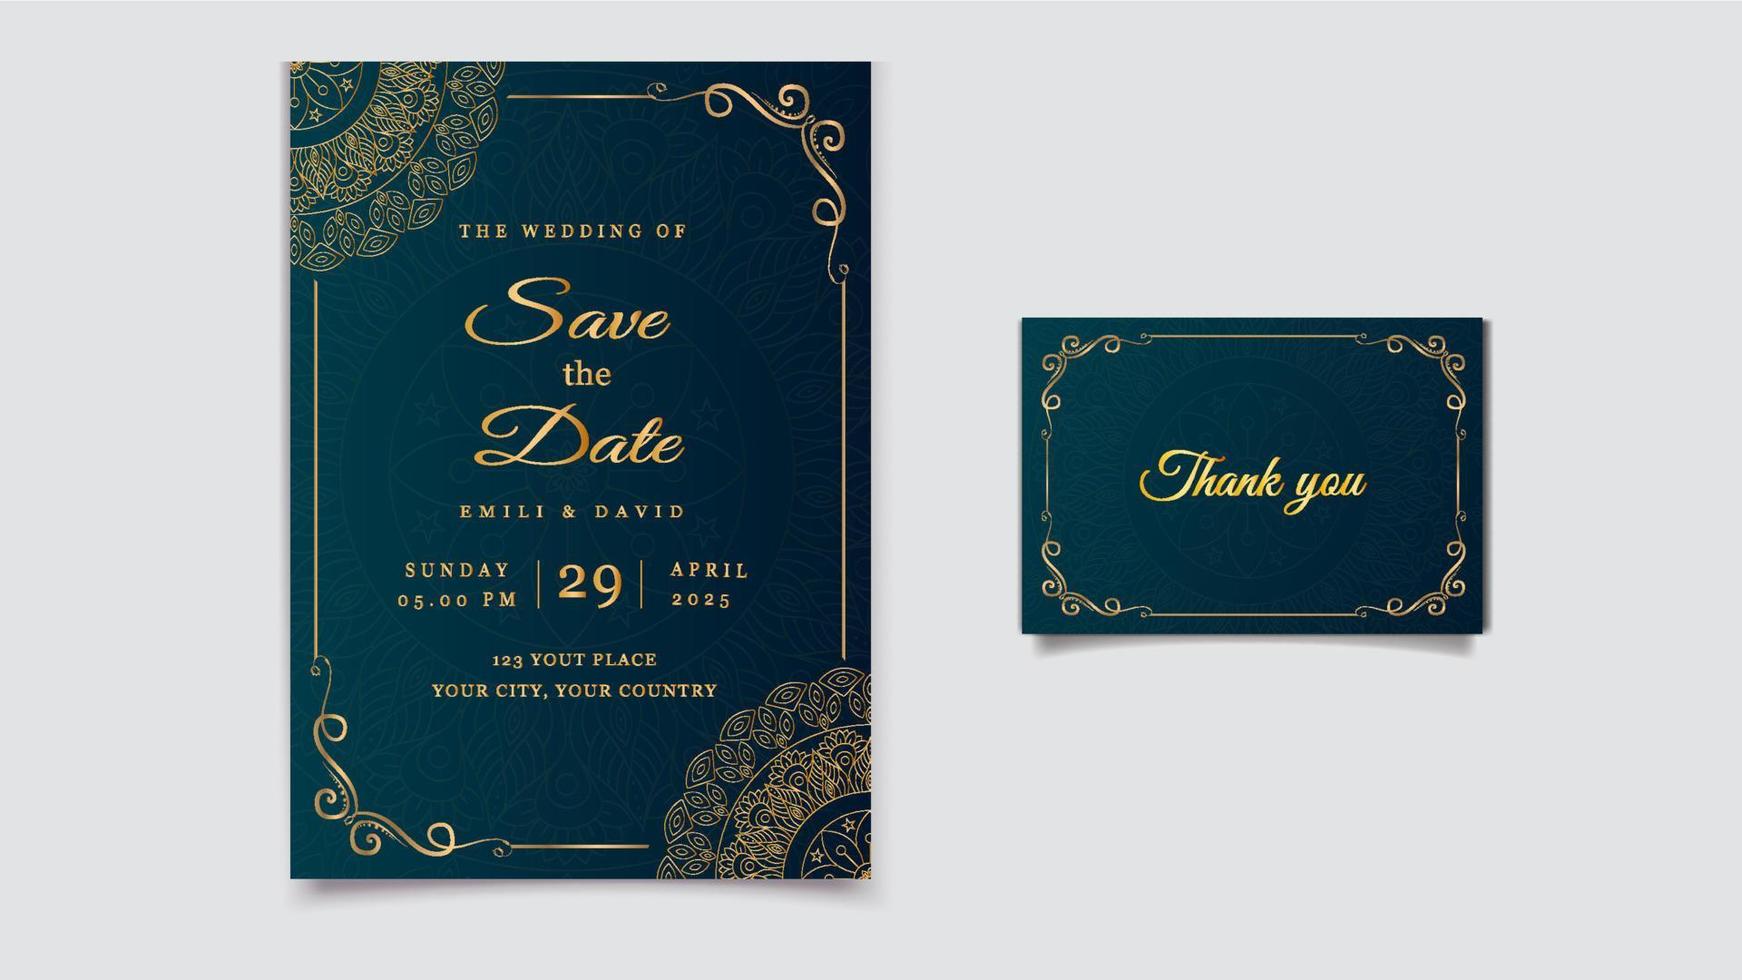 Premium luxury wedding invitation cards with gold,Hindu Wedding Luxury Card , luxury wedding invitation card design , Black and white ornamental wedding card vector